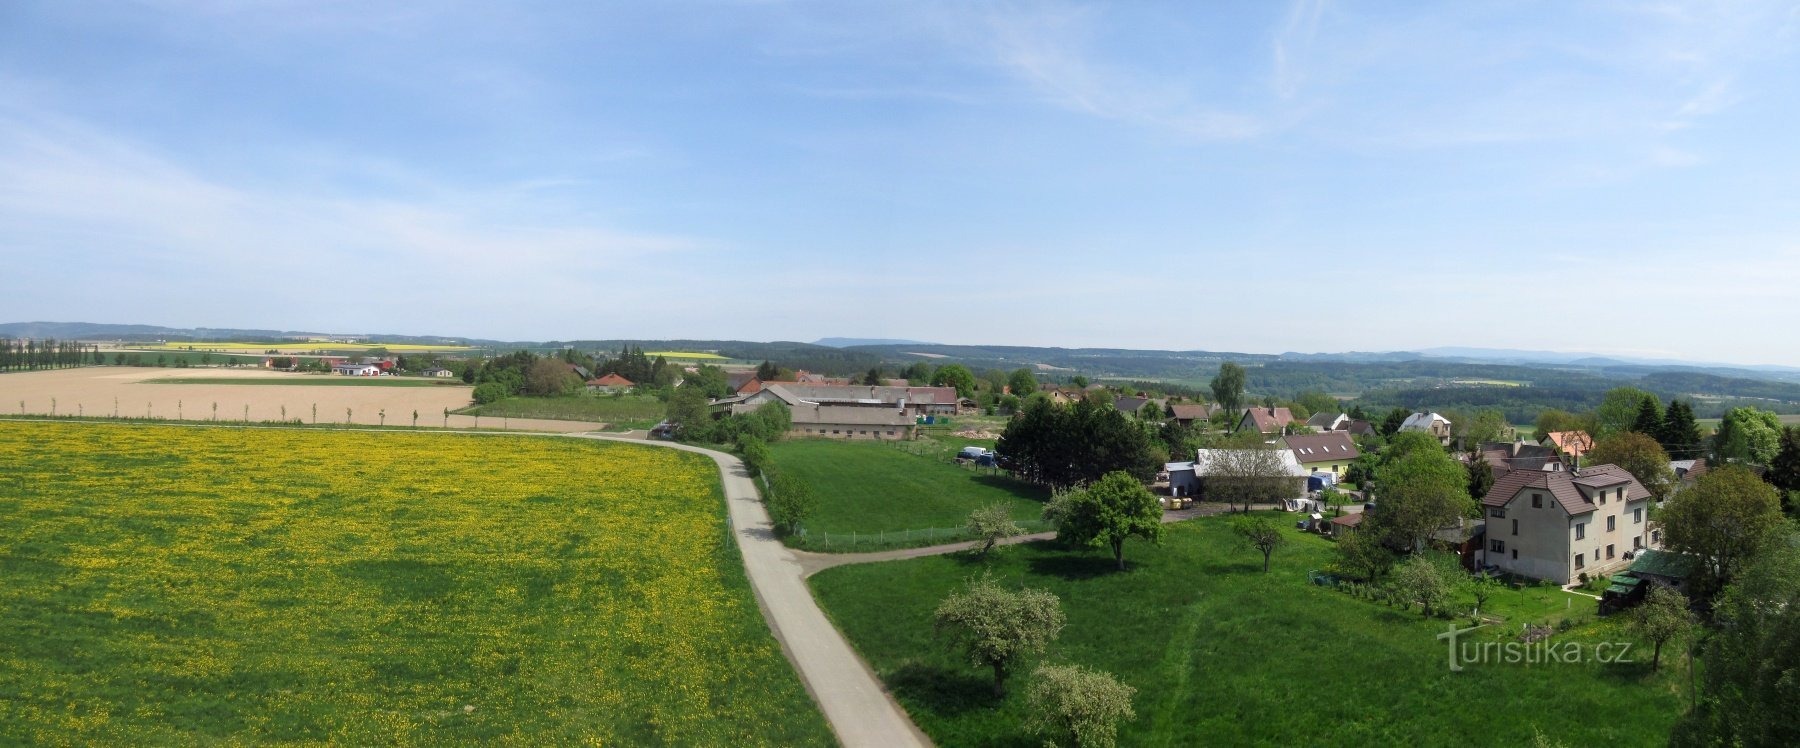 Žernov – villaggio e torre panoramica